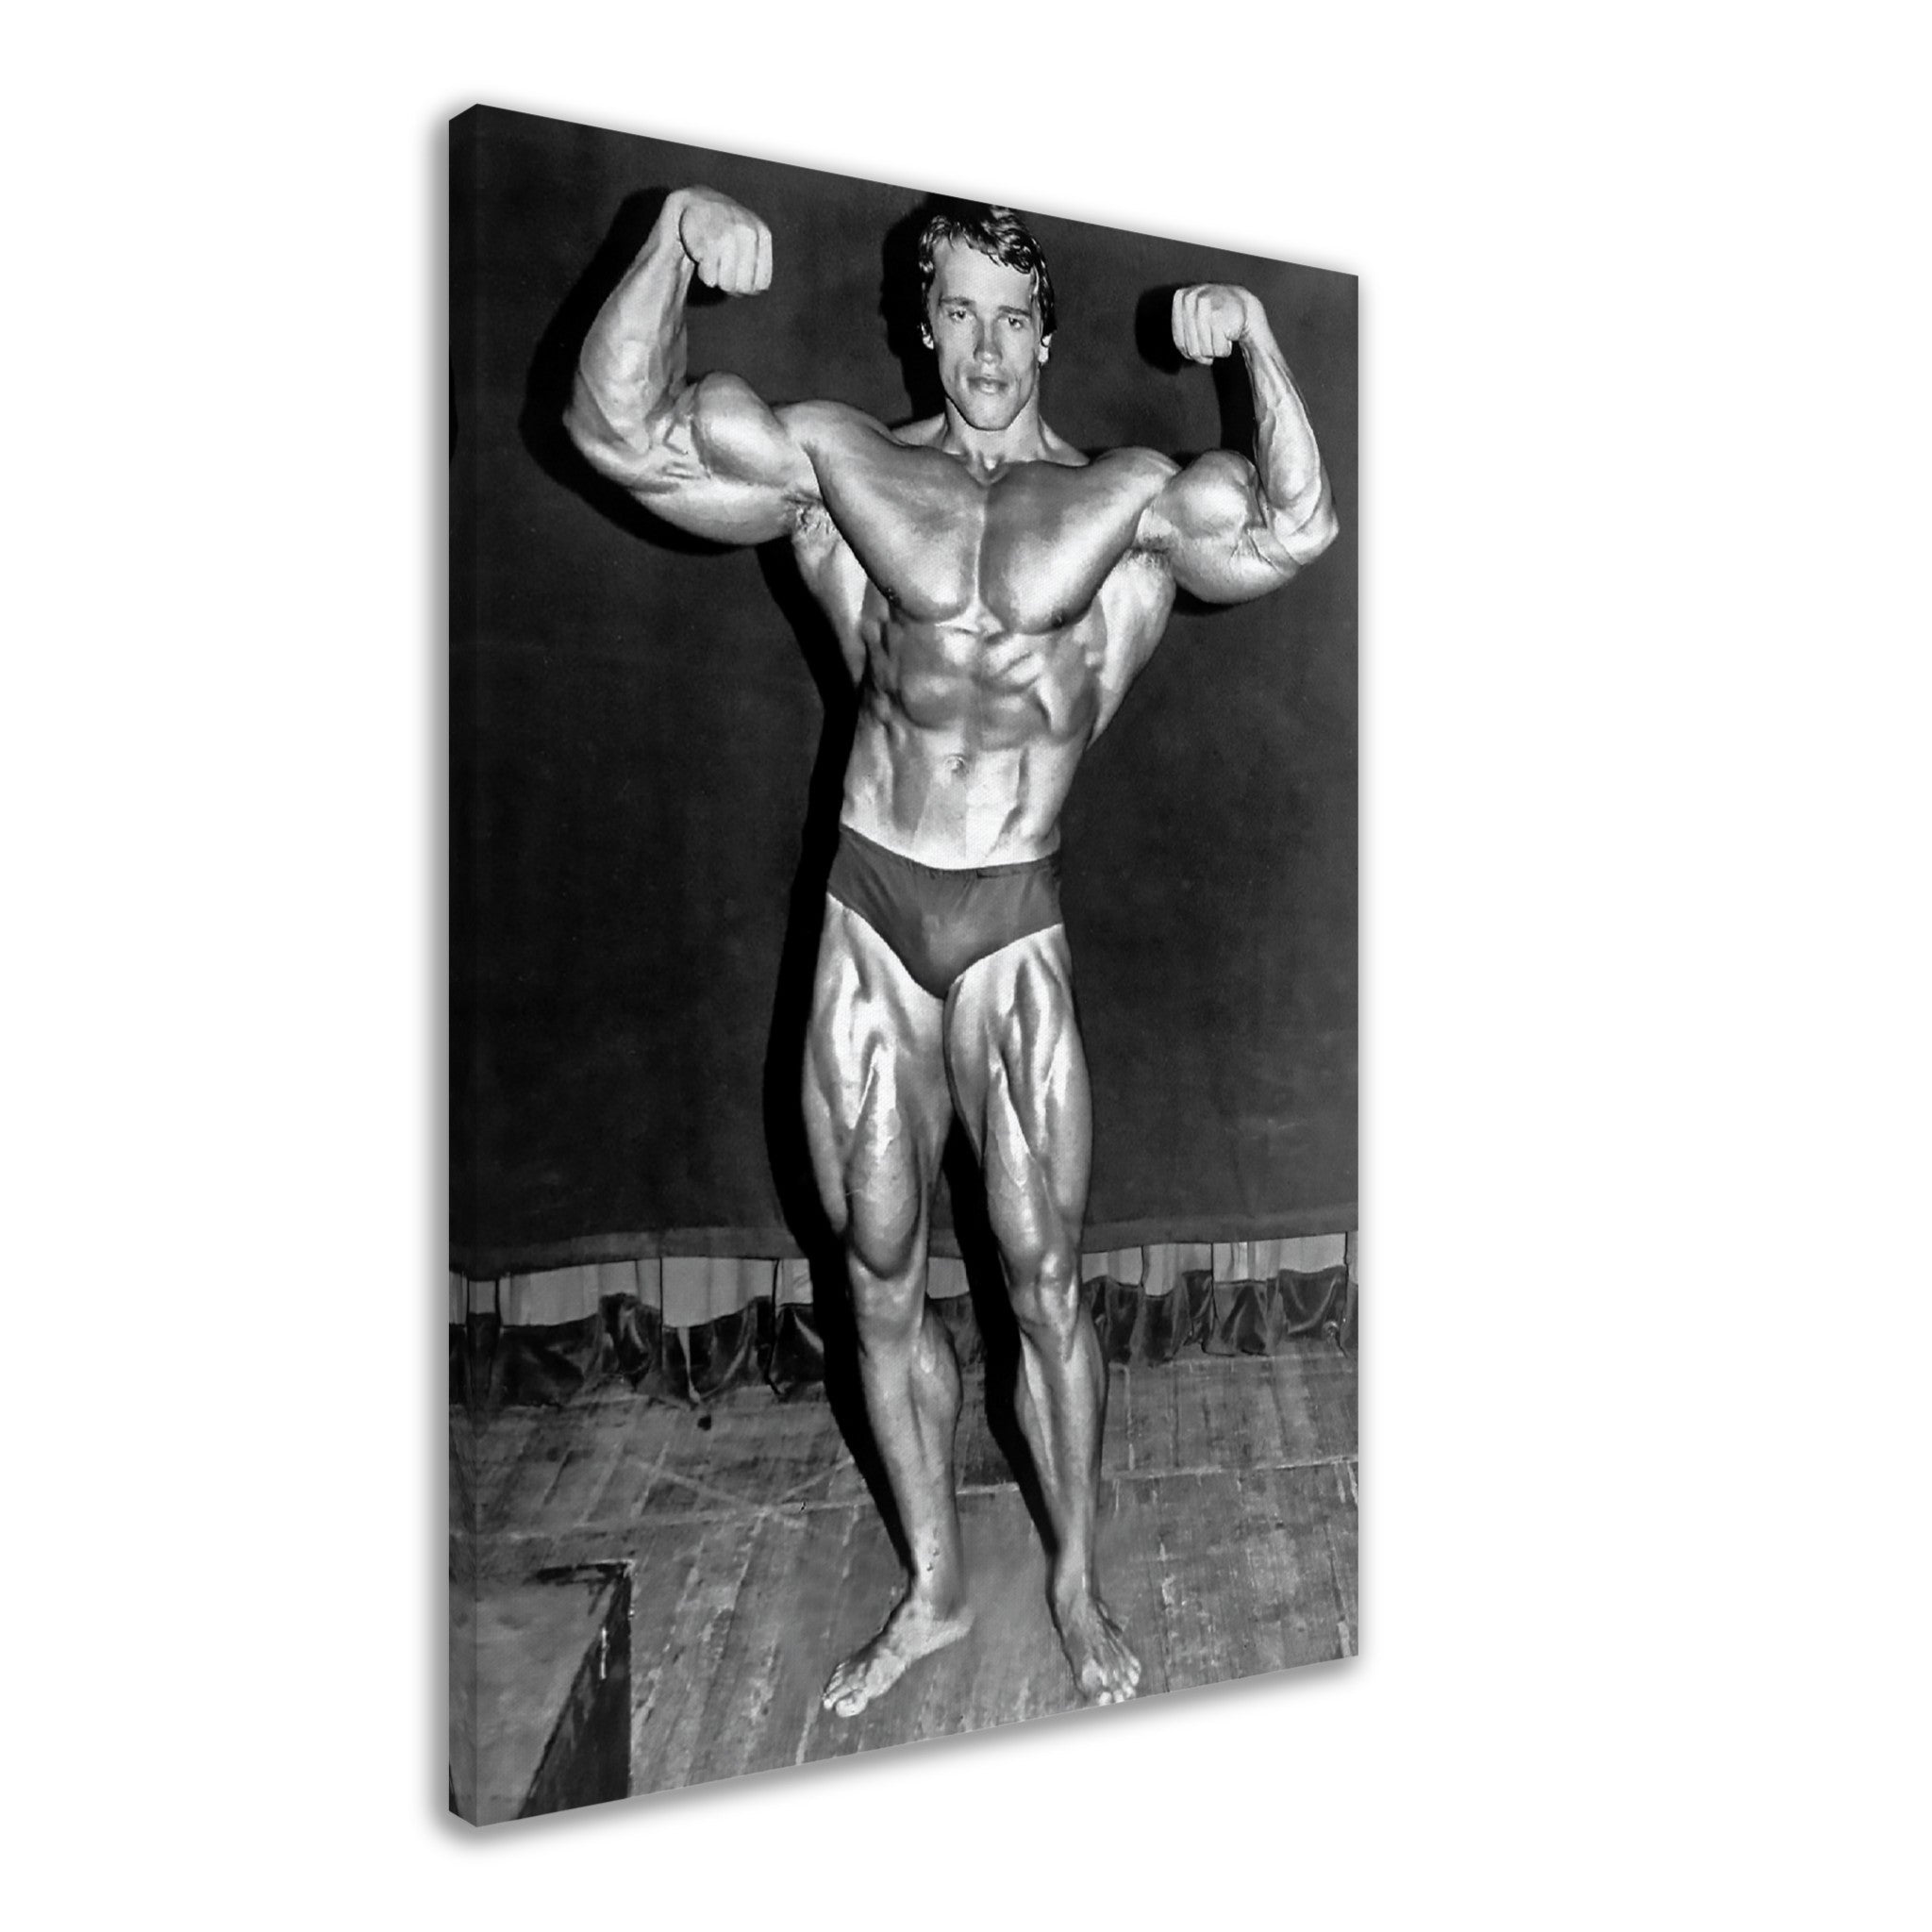 Joseph Baena Mimics Posing Of Father Arnold Schwarzenegger – Fitness Volt